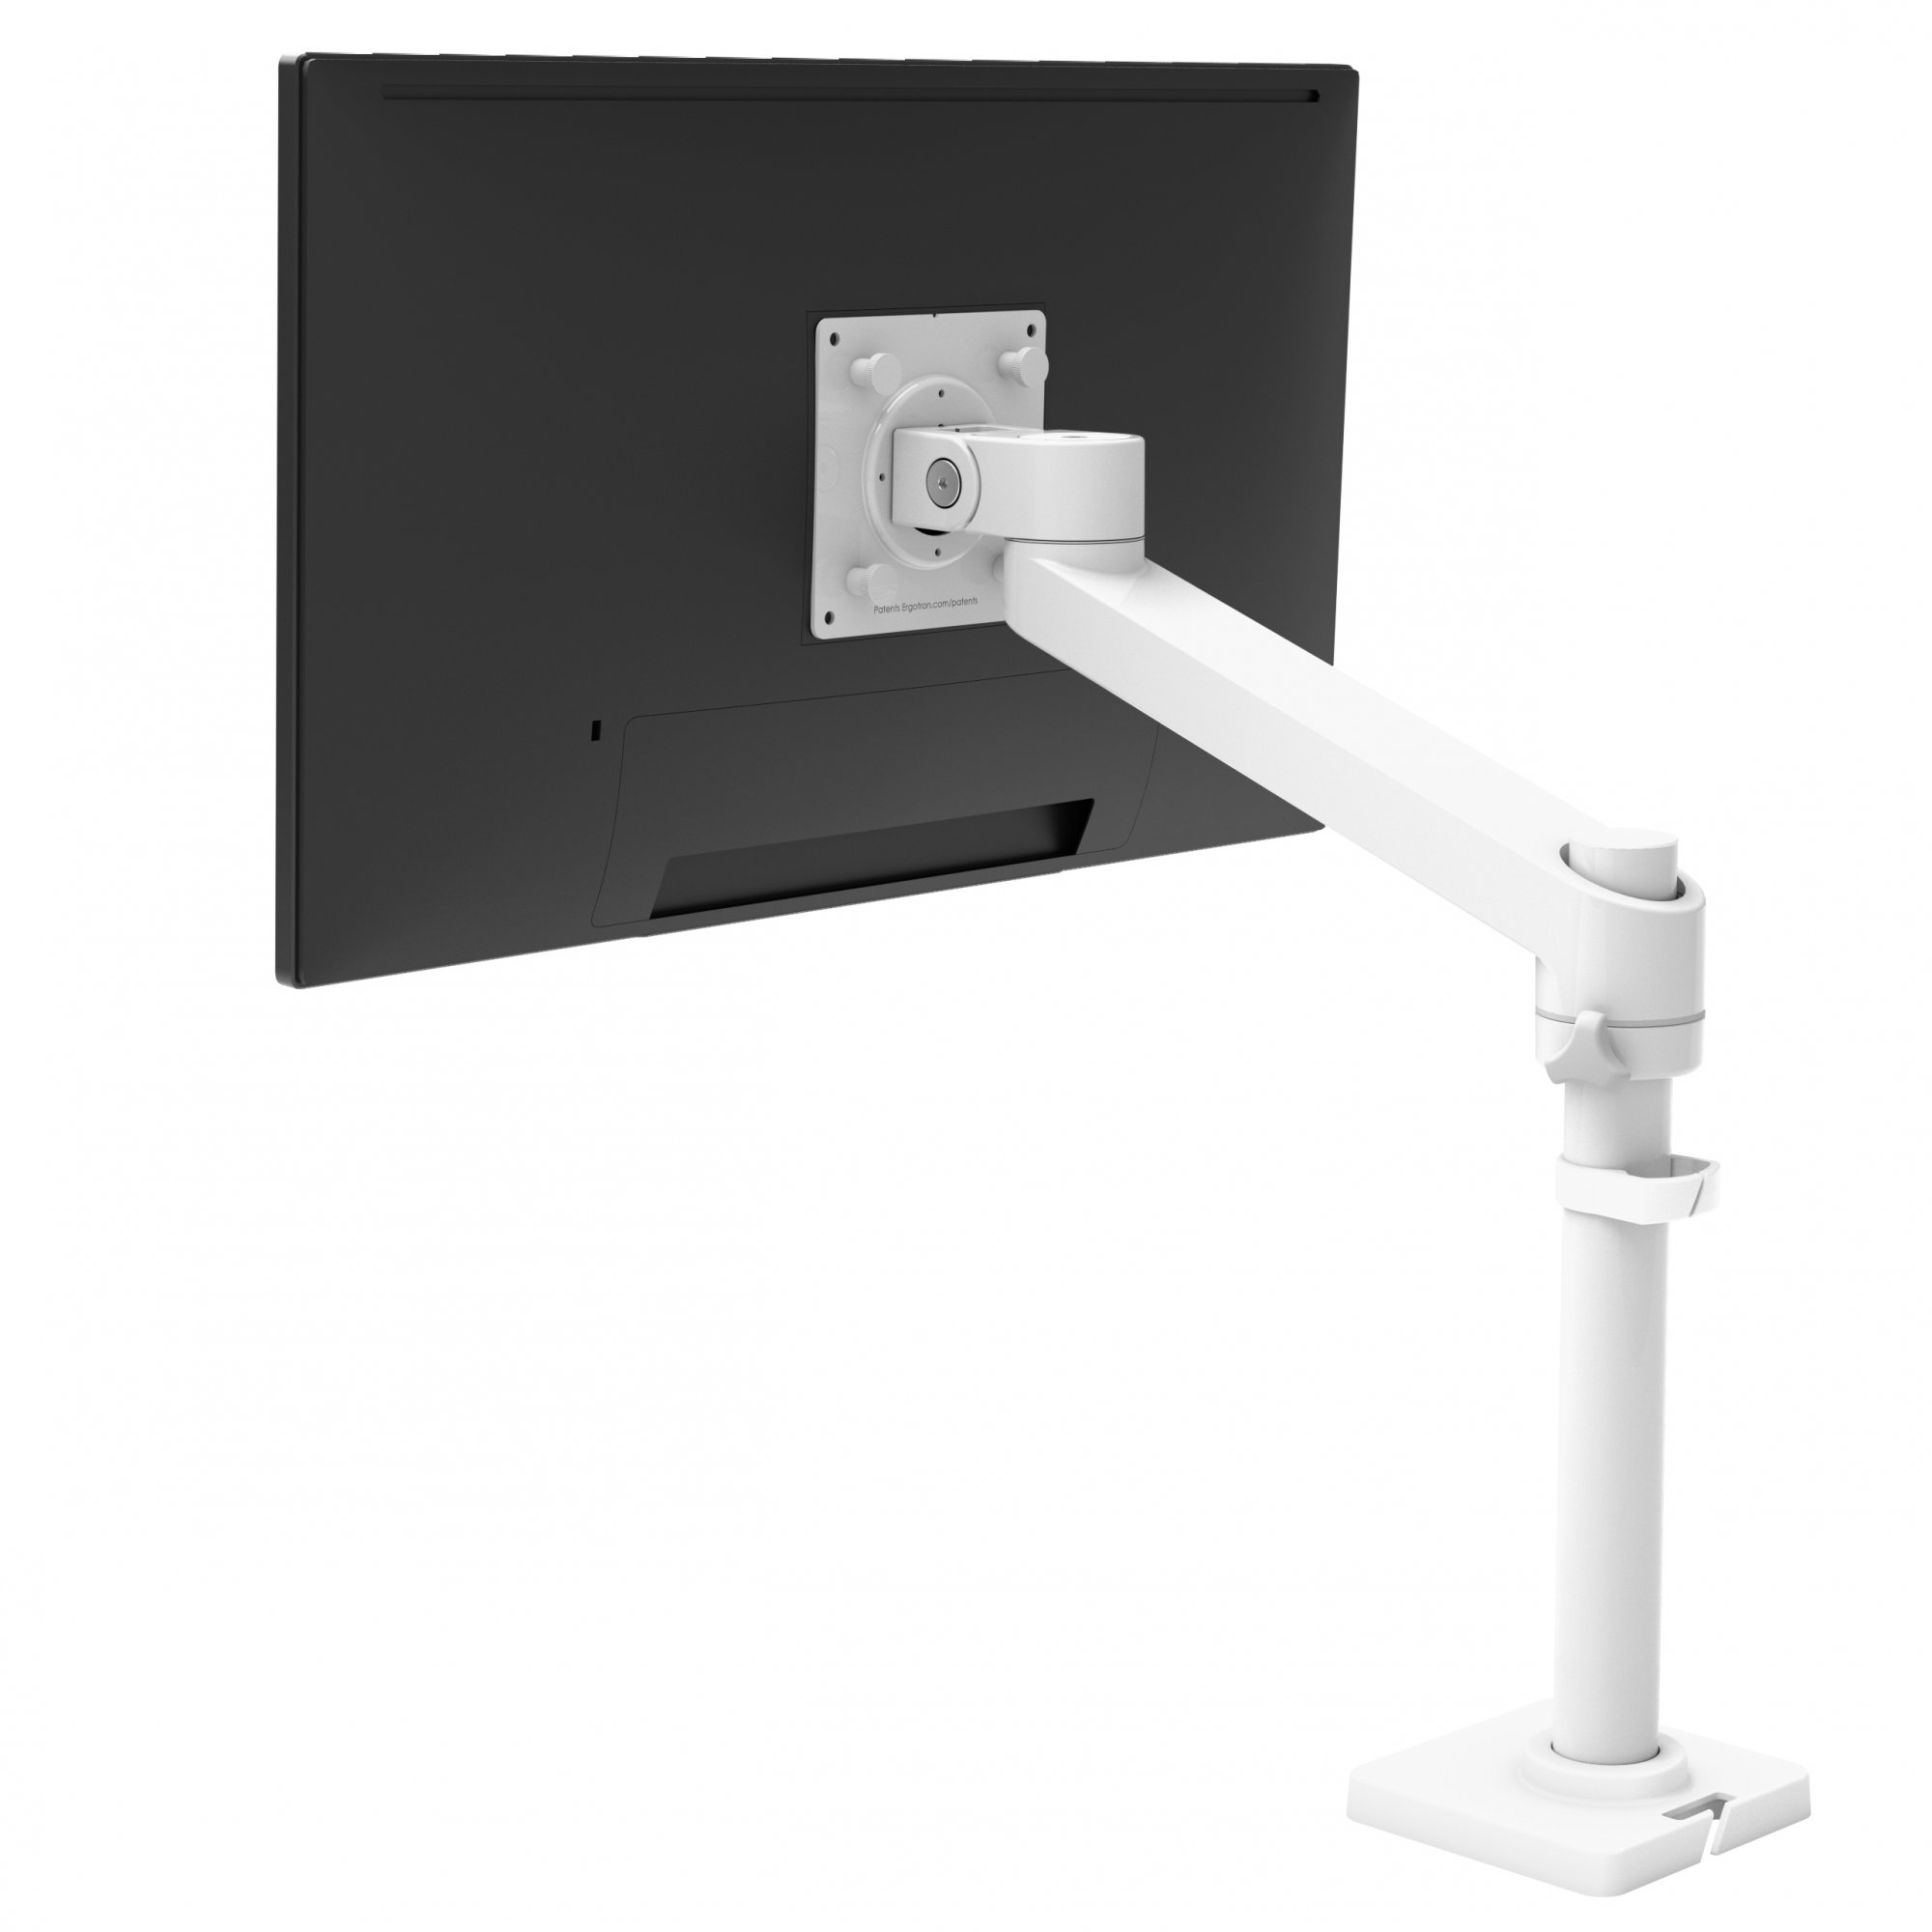 Ergotron 45-669-216 NX Swing Arm Single Monitor Desk Mount